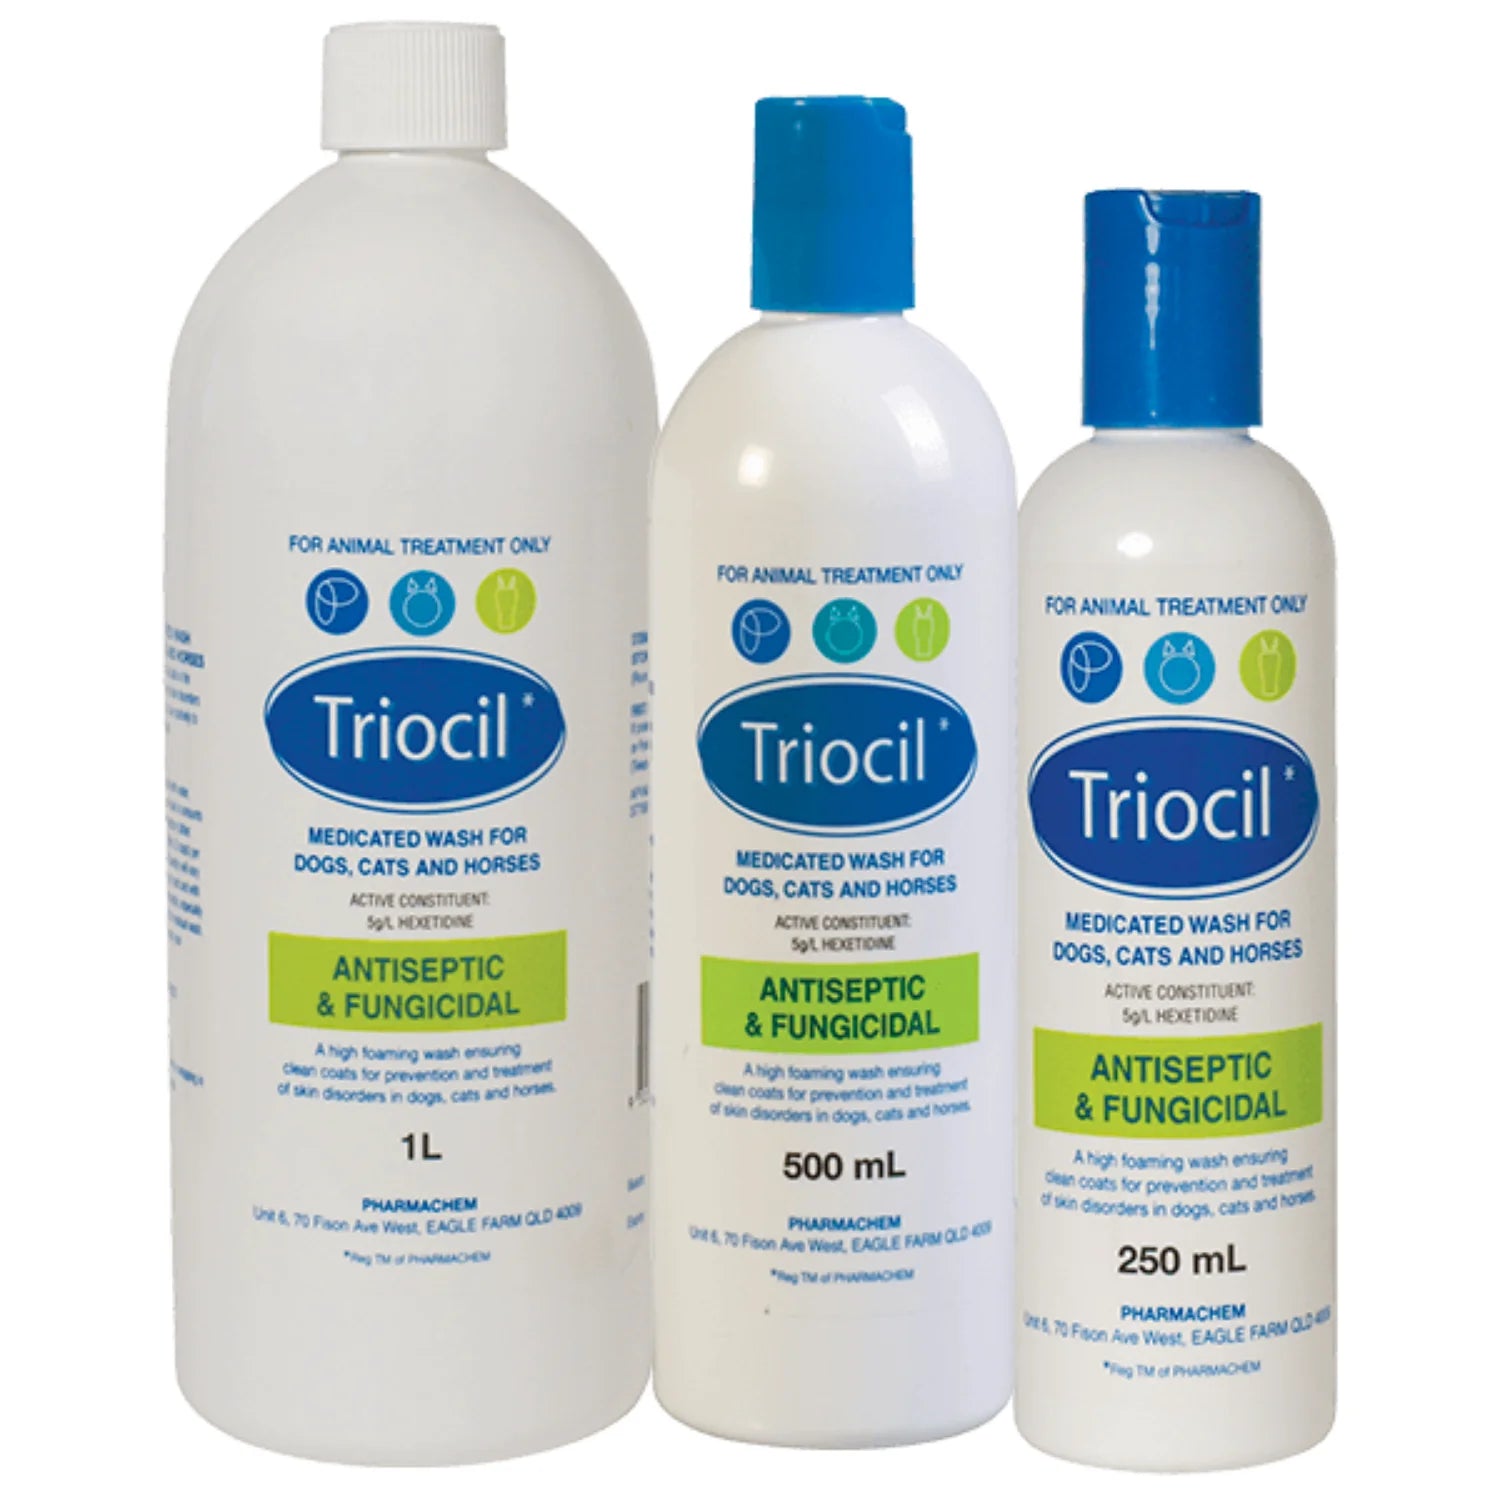 Triocil Medicated Wash